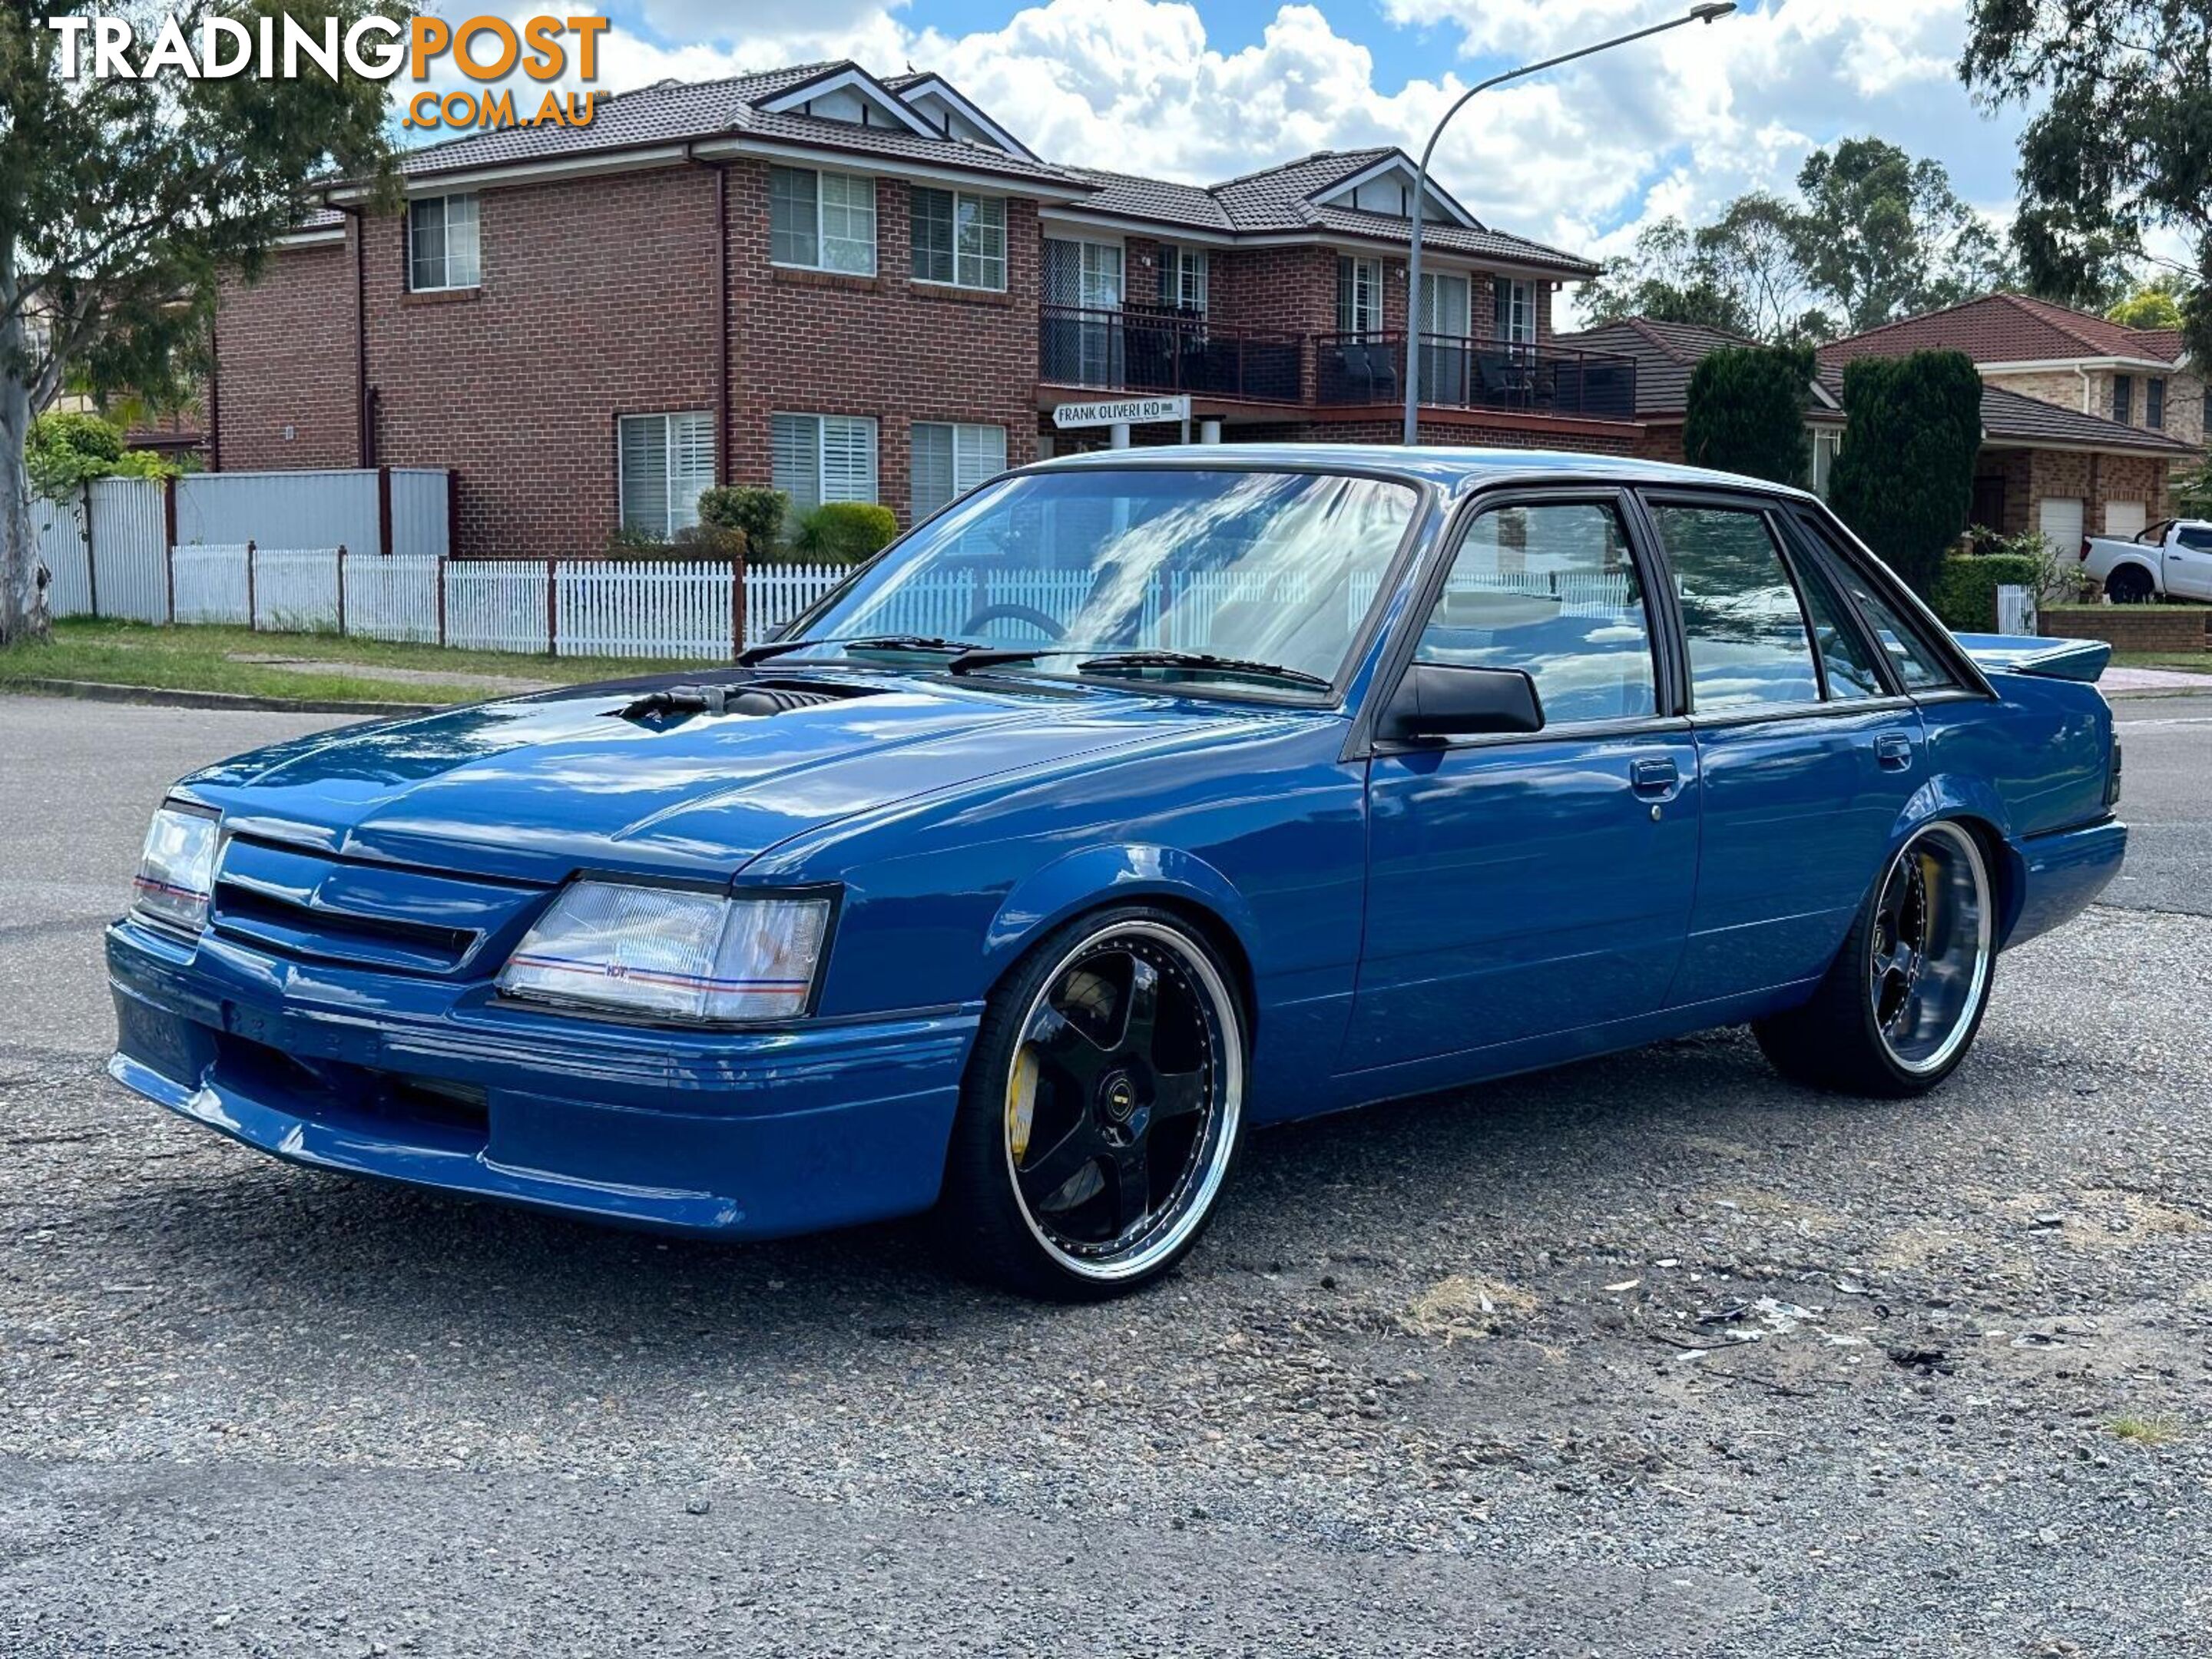 1985 HOLDEN COMMODORE Blue Meanie VK Sedan